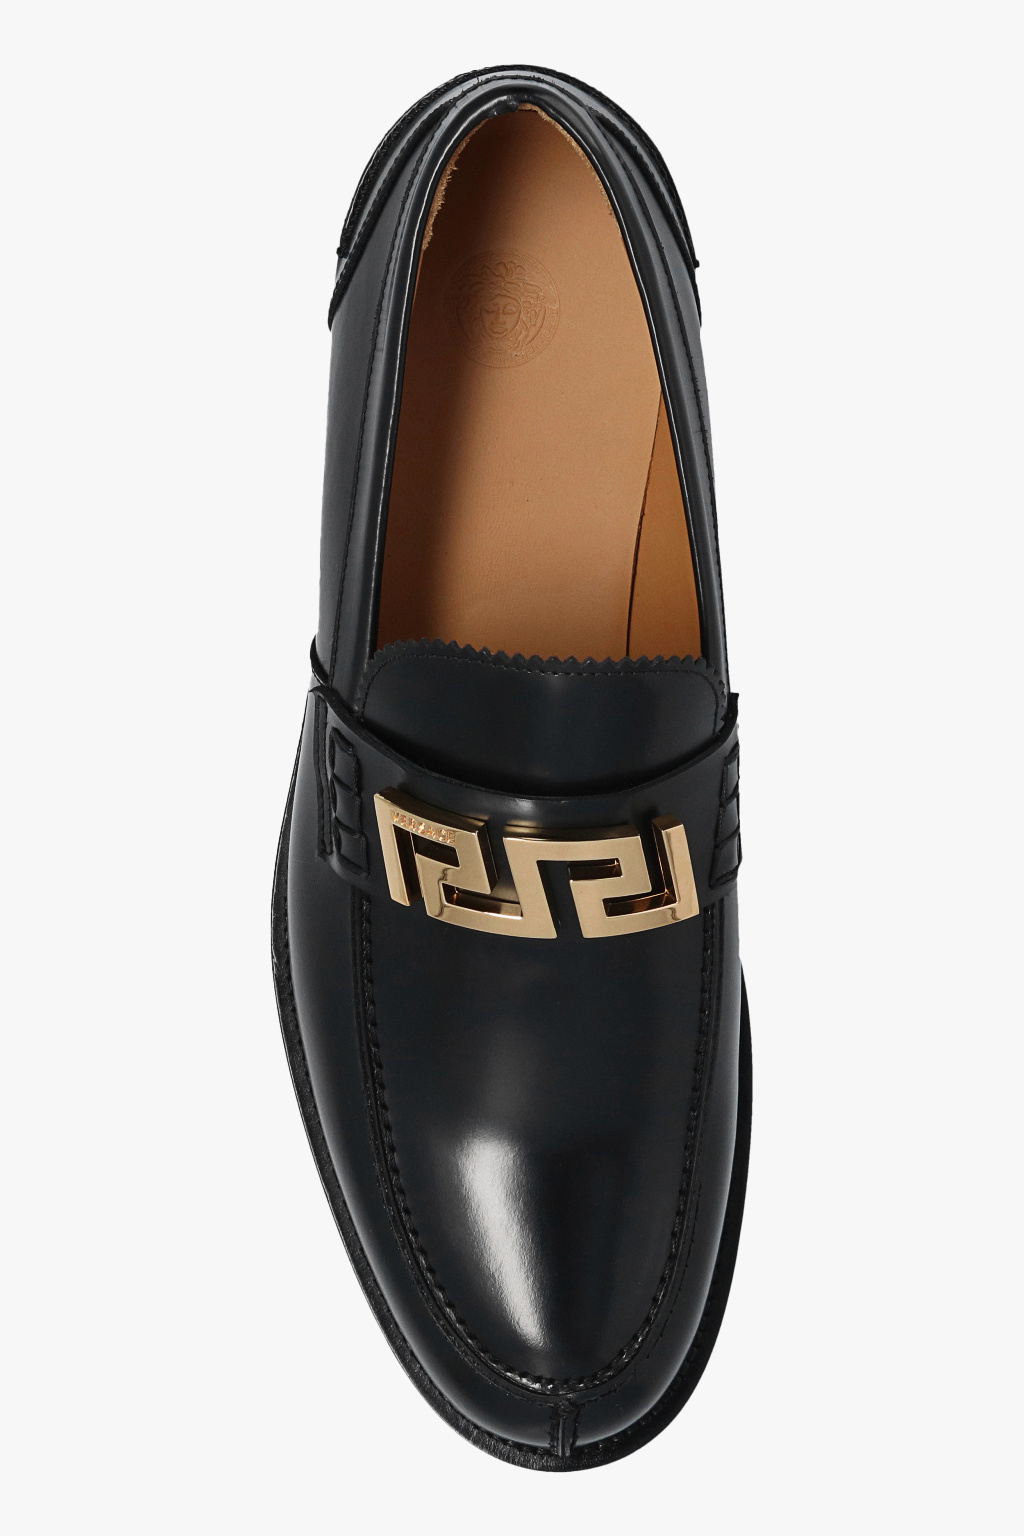 Versace ‘La Greca’ loafers